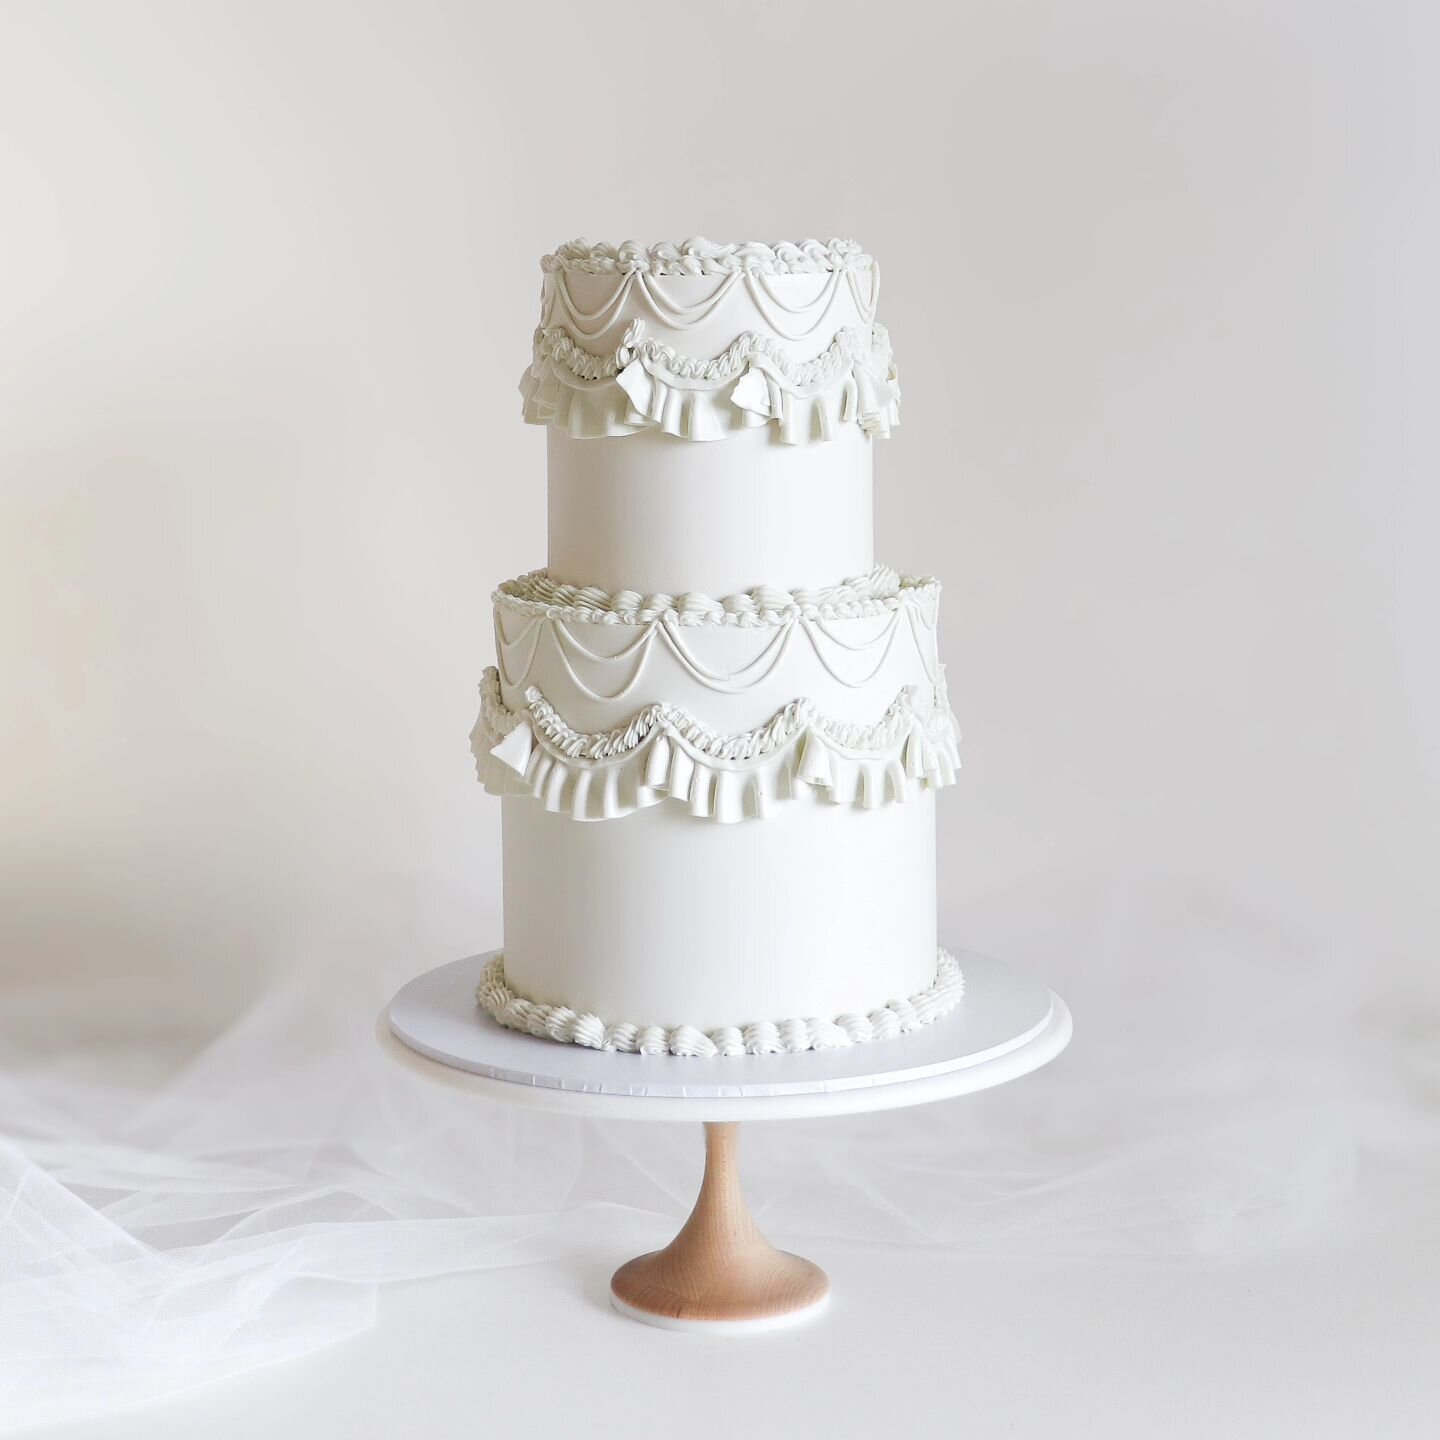 Danielle &amp; Cade 🥂

#weddingcake #lambethcake #vintagecake #whiteweddingcake #geelongcakes #geelongwedding #cakedesign #weddingcakeideas #wedding